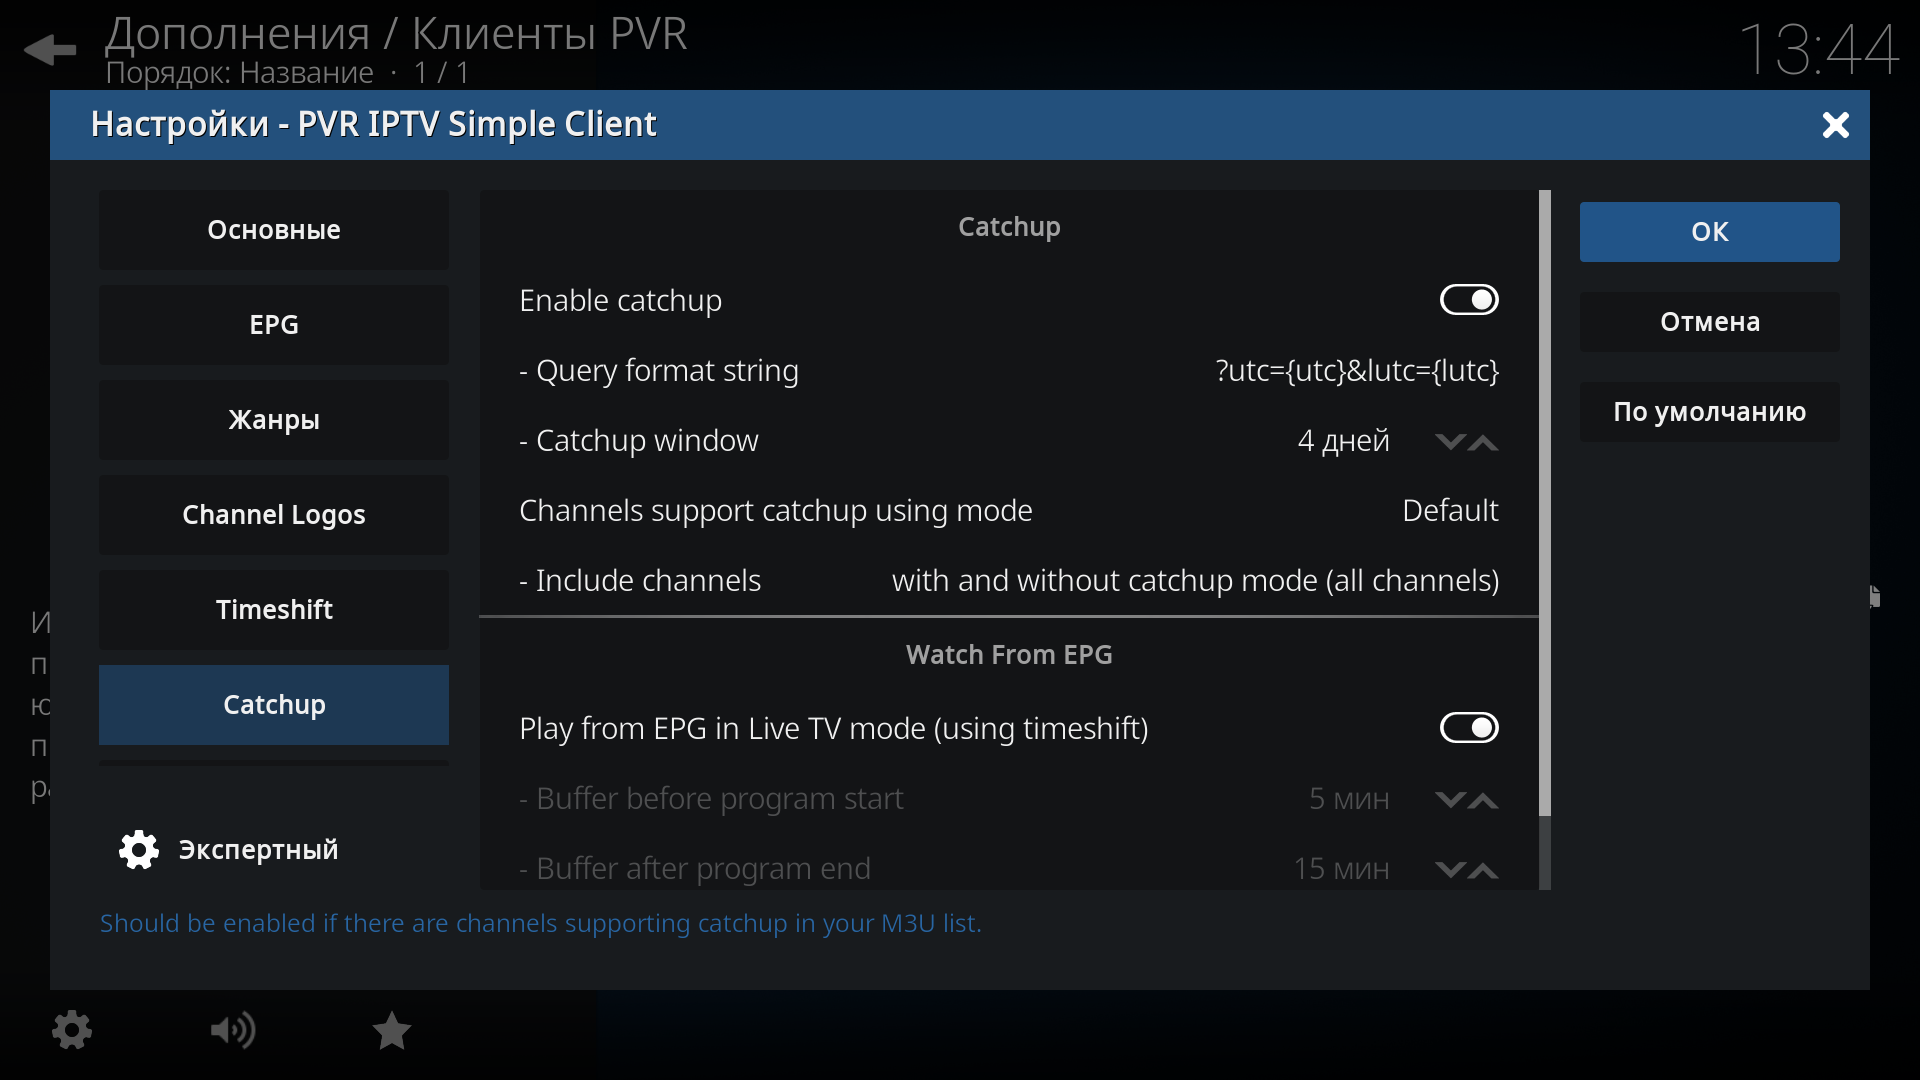 Настройки PVR IPTV Simple Client/Catchup